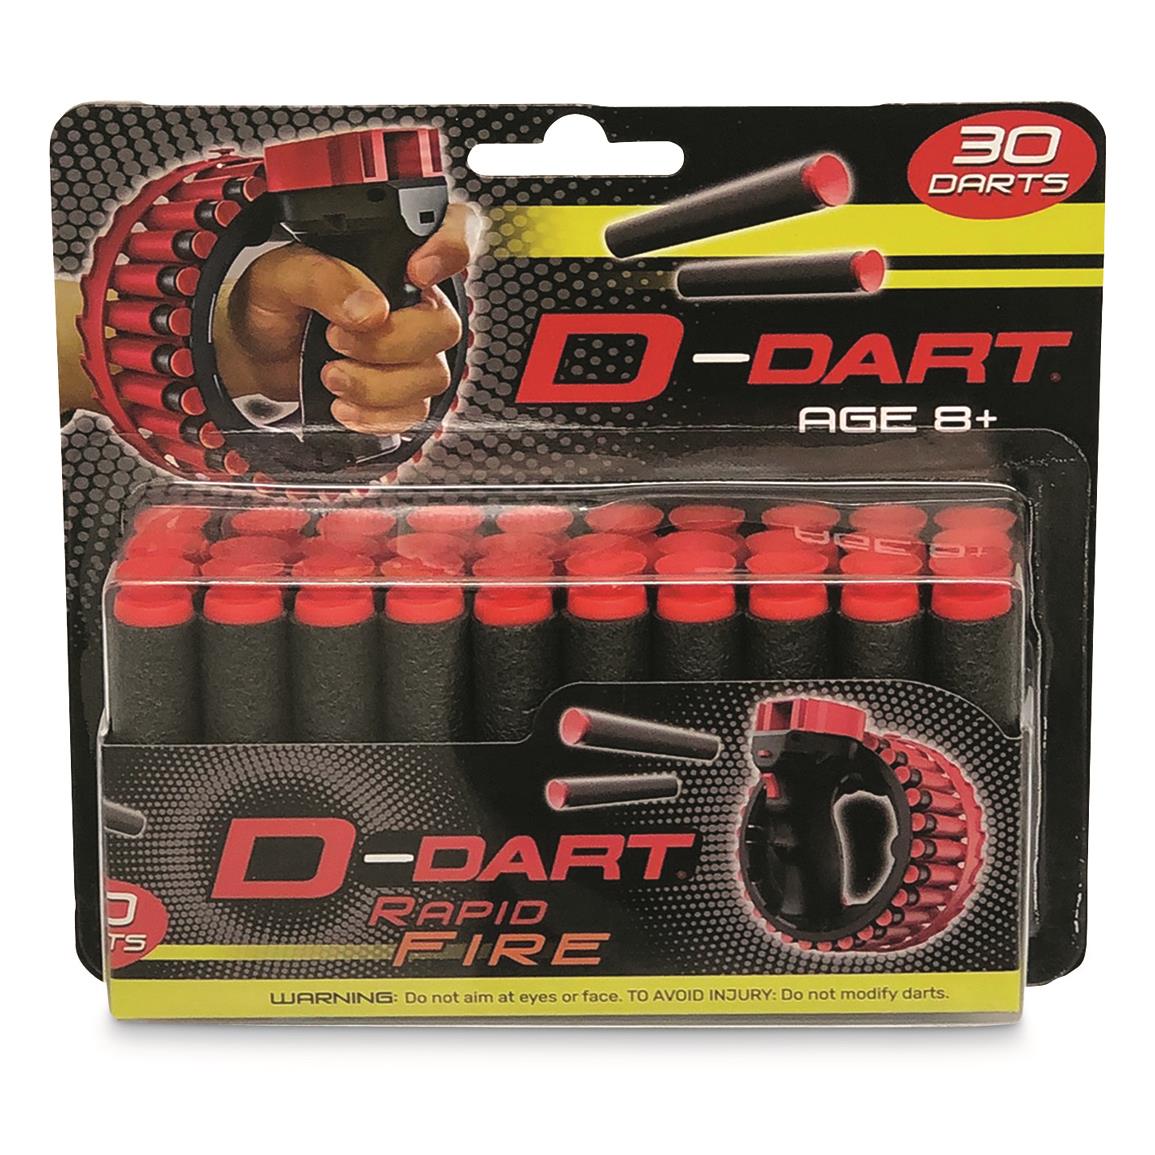 D-Dart Refill Darts, 30 Pack